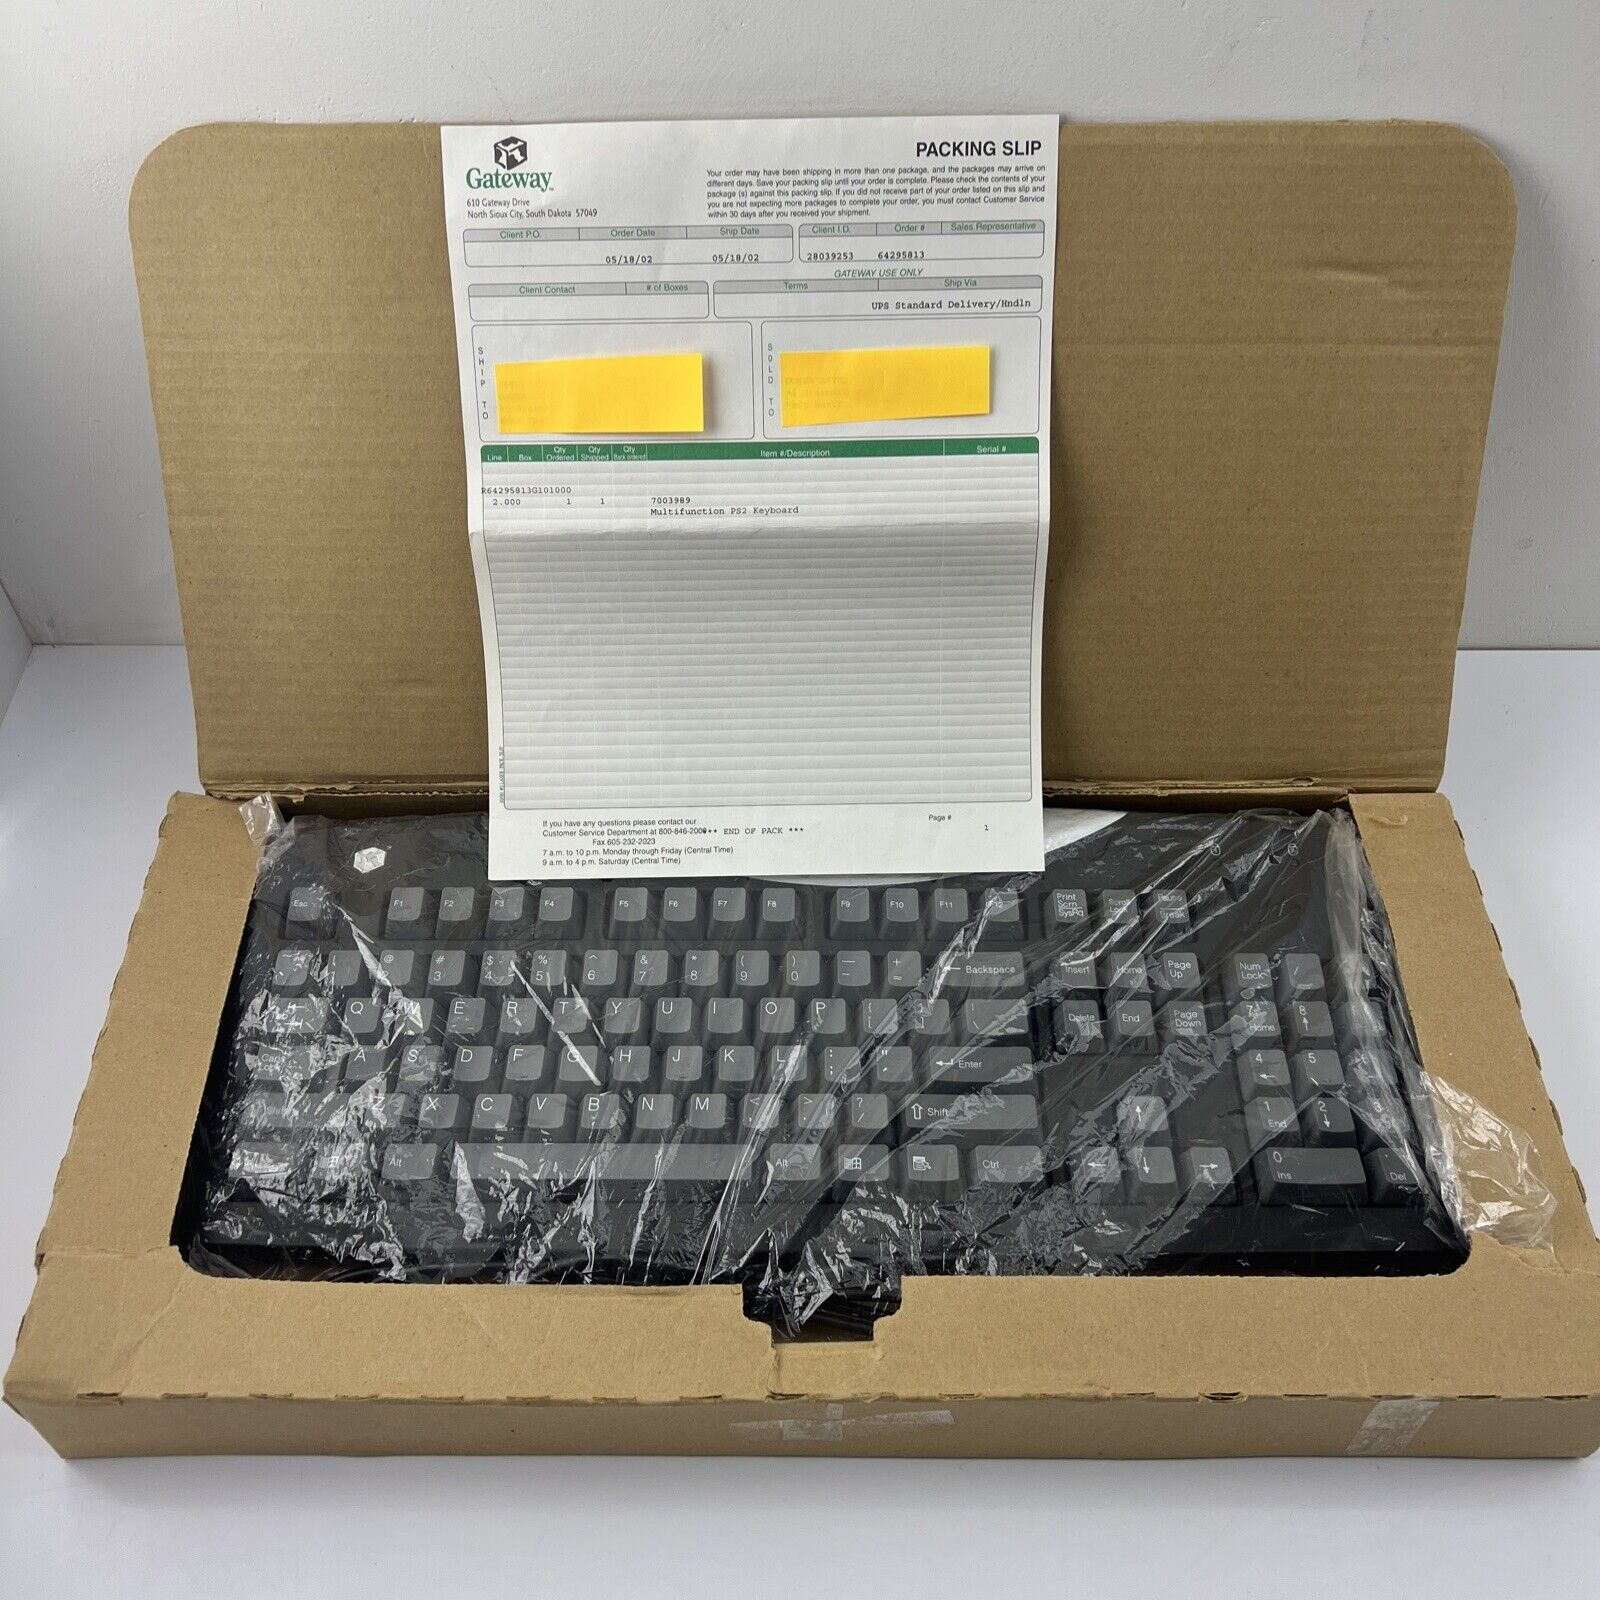 VTG Gateway SK-9920  PS/2 Keyboard - Open Box/New Old Stock Org. Gateway Invoice